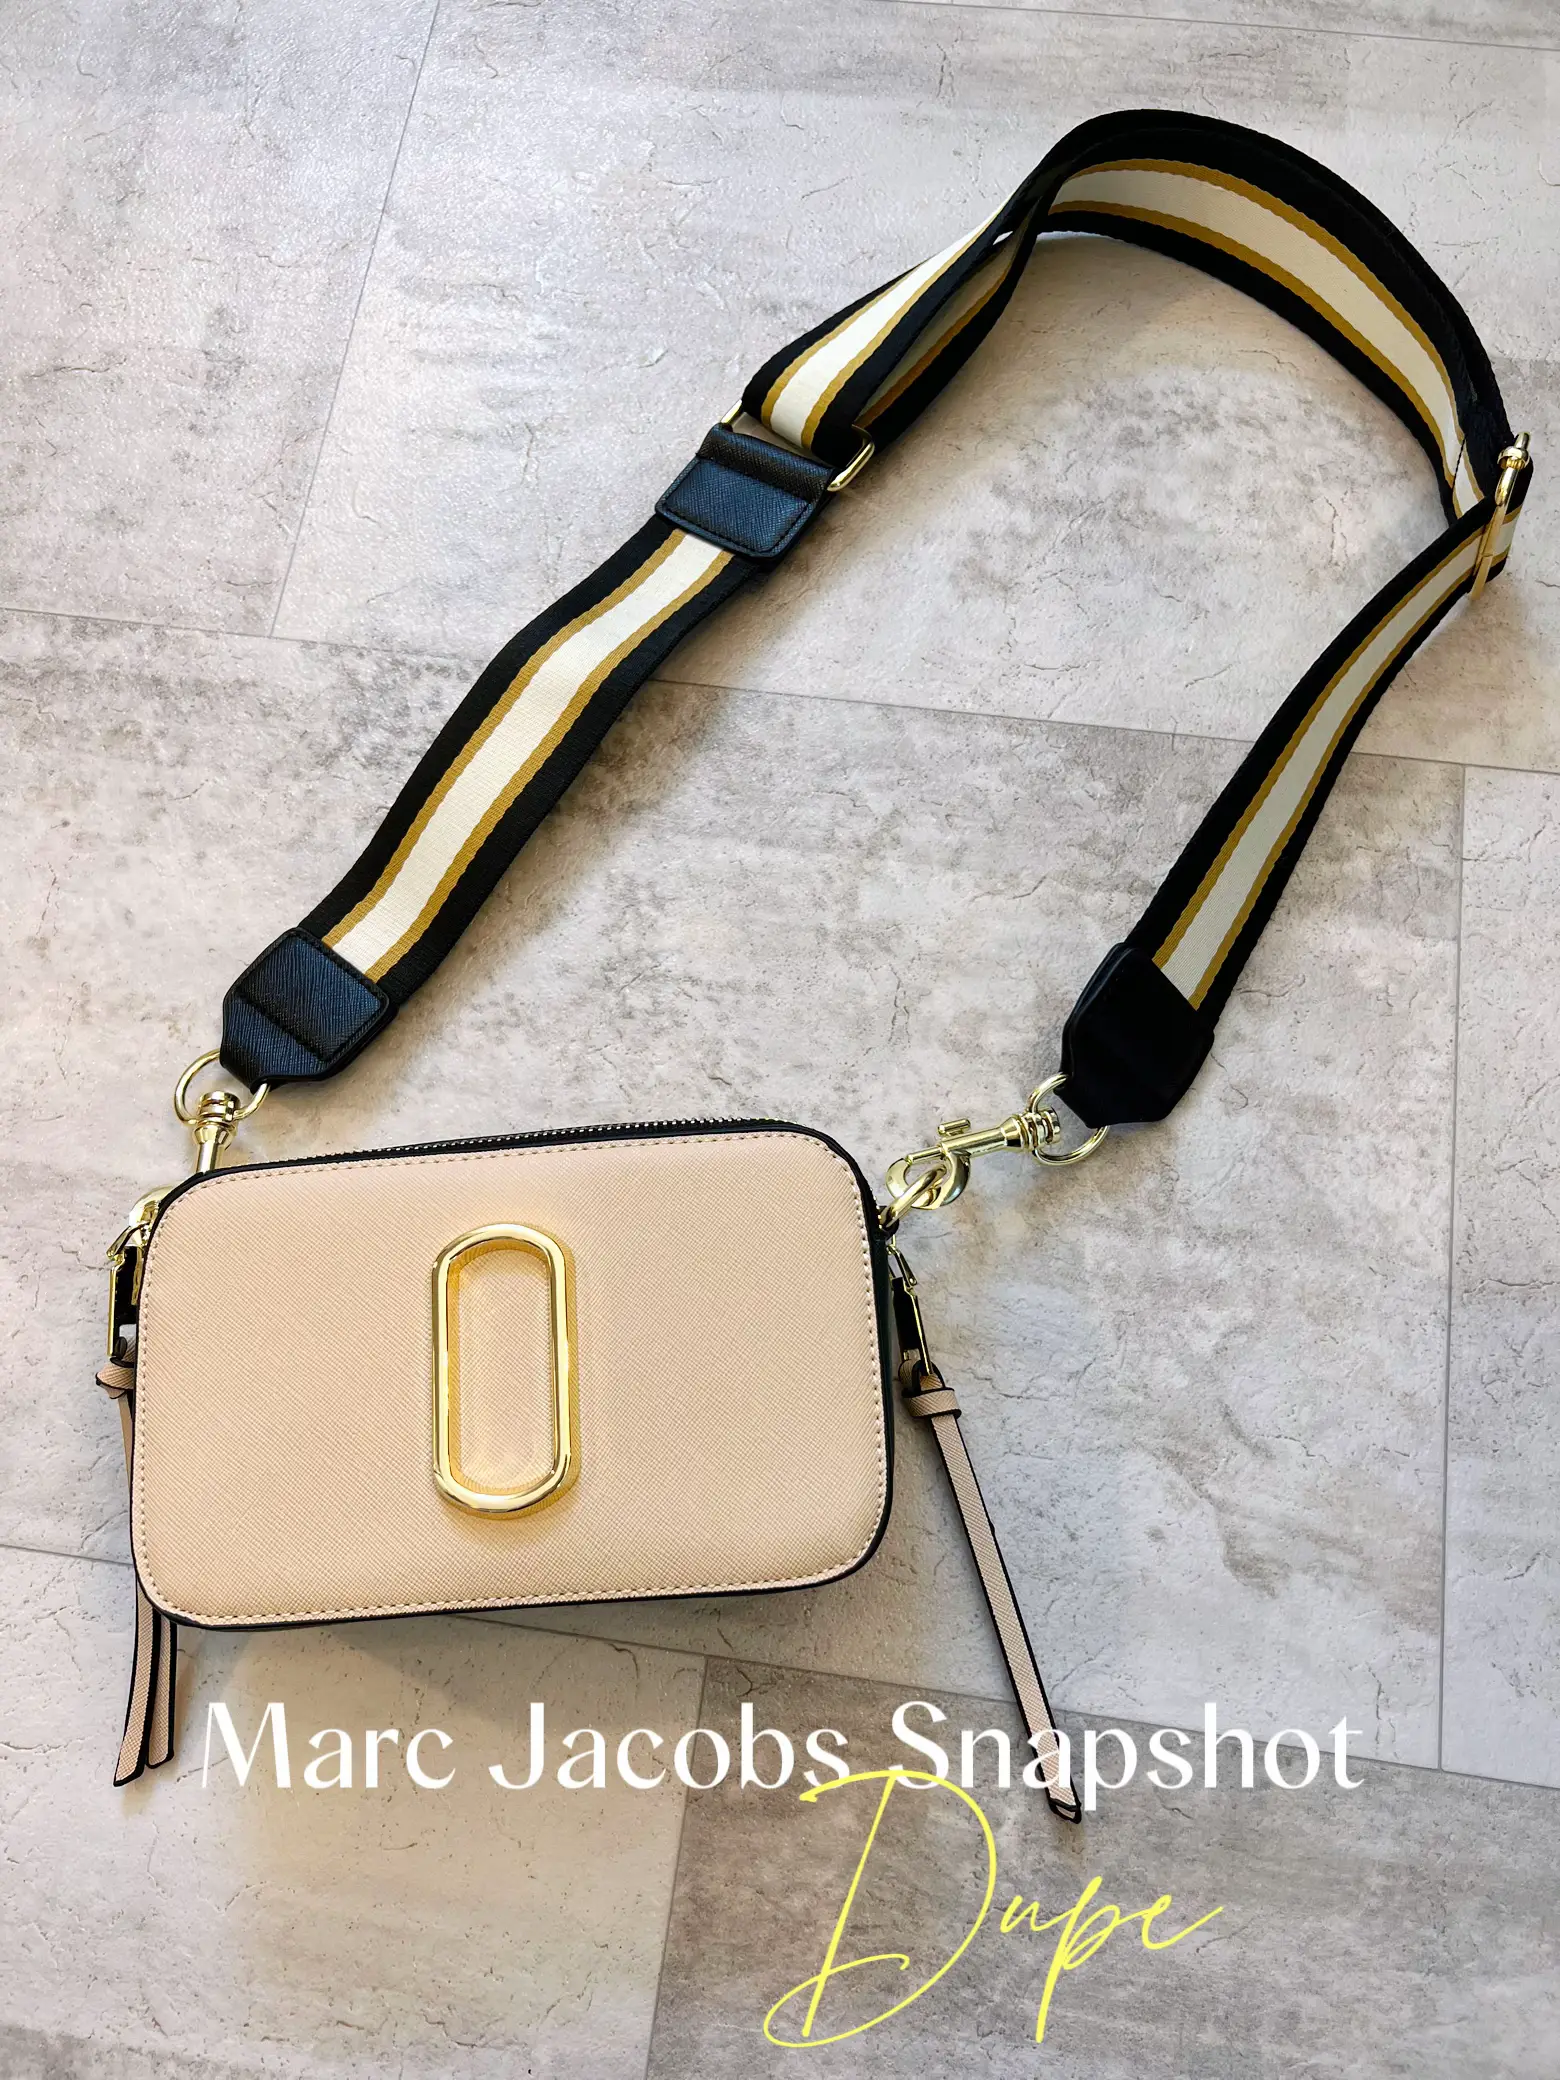 Marc Jacobs Snapshot Bag Dupe 